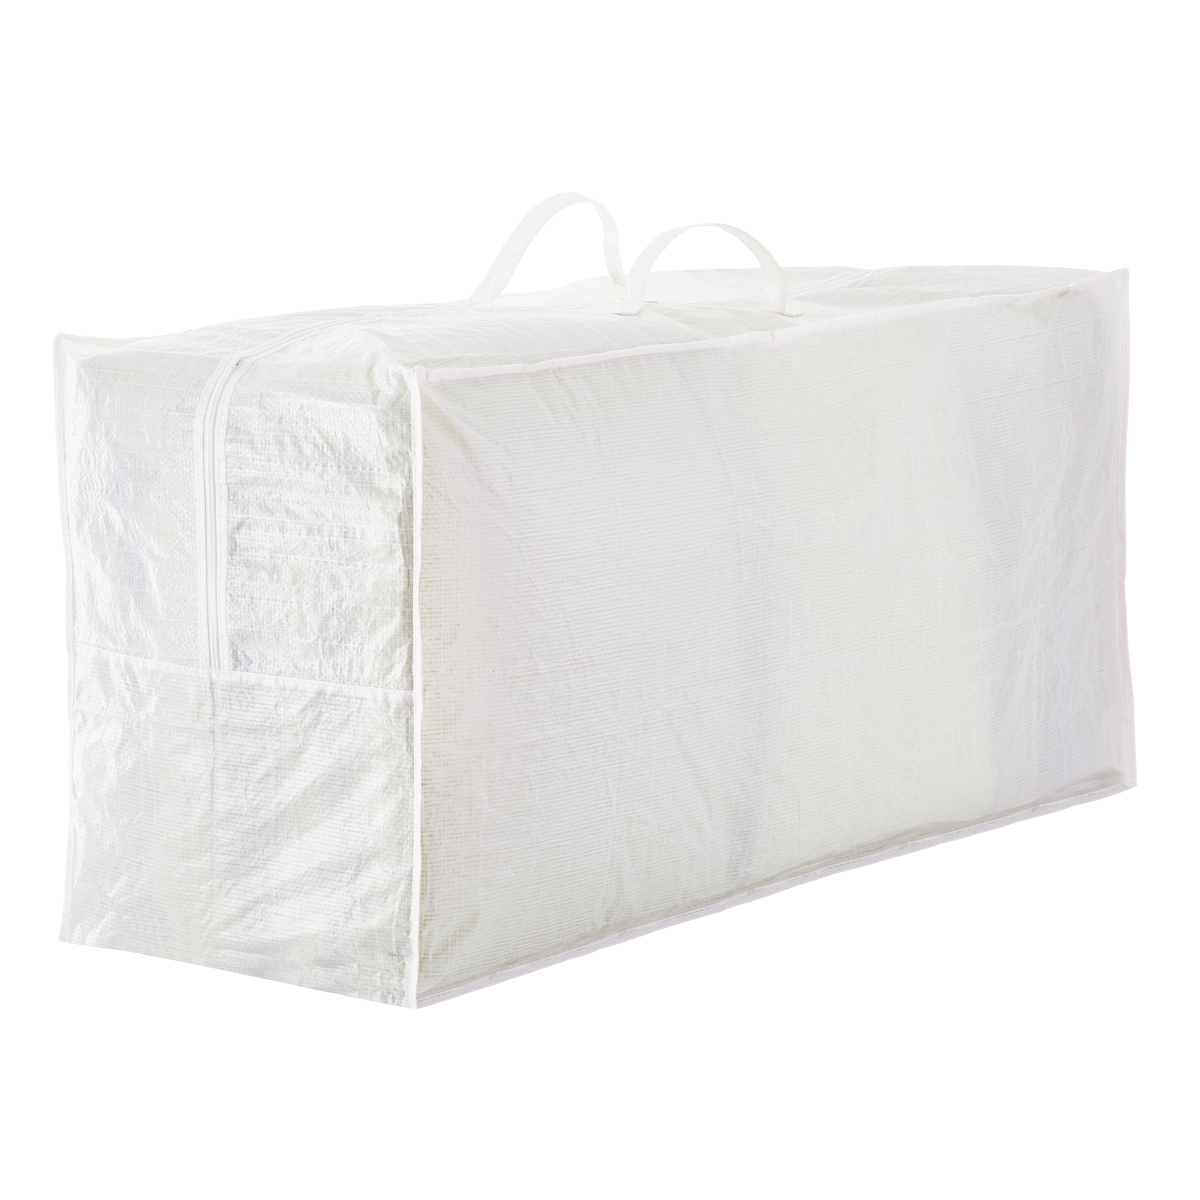 Jaylon Outdoor Cushion Storage Bag Cover  Reviews  AllModern